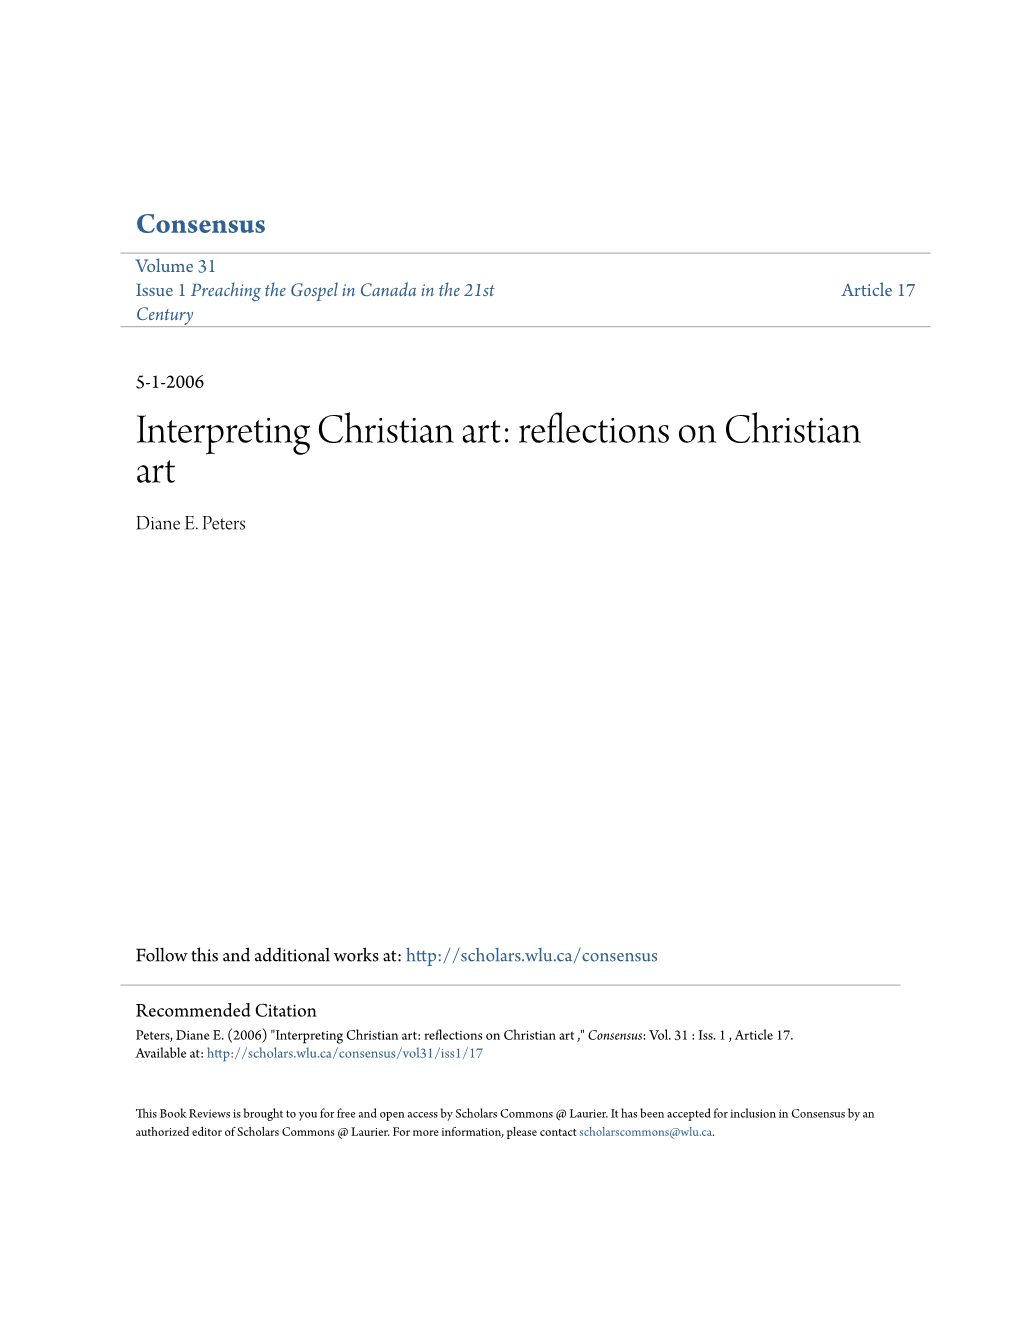 Interpreting Christian Art: Reflections on Christian Art Diane E